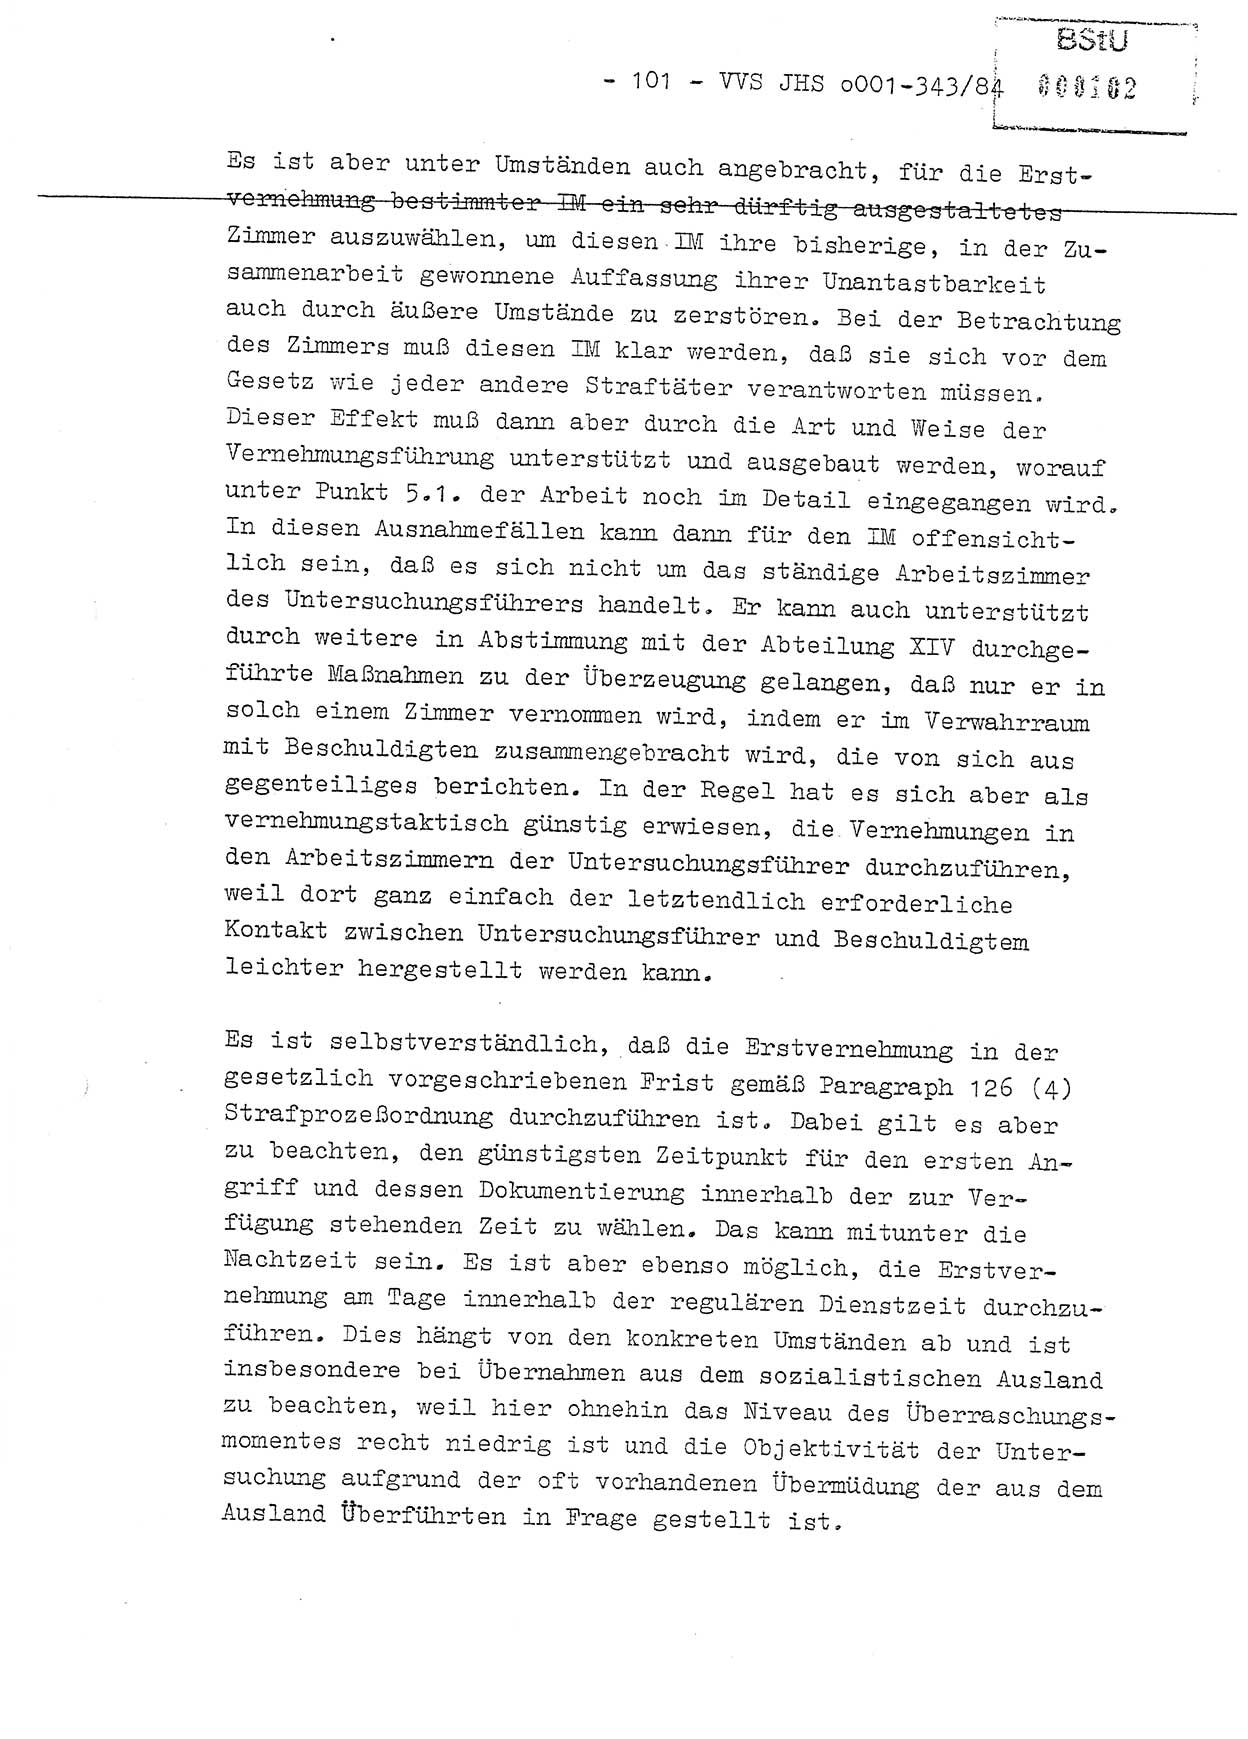 Diplomarbeit, Oberleutnant Bernd Michael (HA Ⅸ/5), Oberleutnant Peter Felber (HA IX/5), Ministerium für Staatssicherheit (MfS) [Deutsche Demokratische Republik (DDR)], Juristische Hochschule (JHS), Vertrauliche Verschlußsache (VVS) o001-343/84, Potsdam 1985, Seite 101 (Dipl.-Arb. MfS DDR JHS VVS o001-343/84 1985, S. 101)